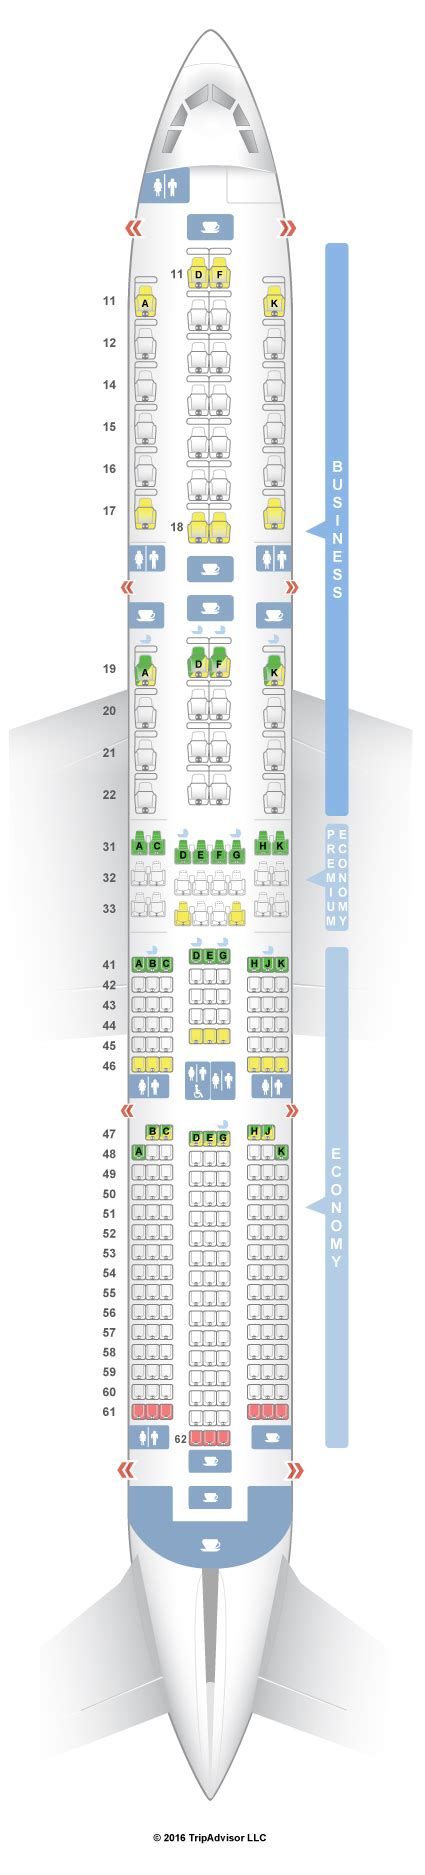 Seatguru Seat Map Singapore Airlines Airbus A350 900 359